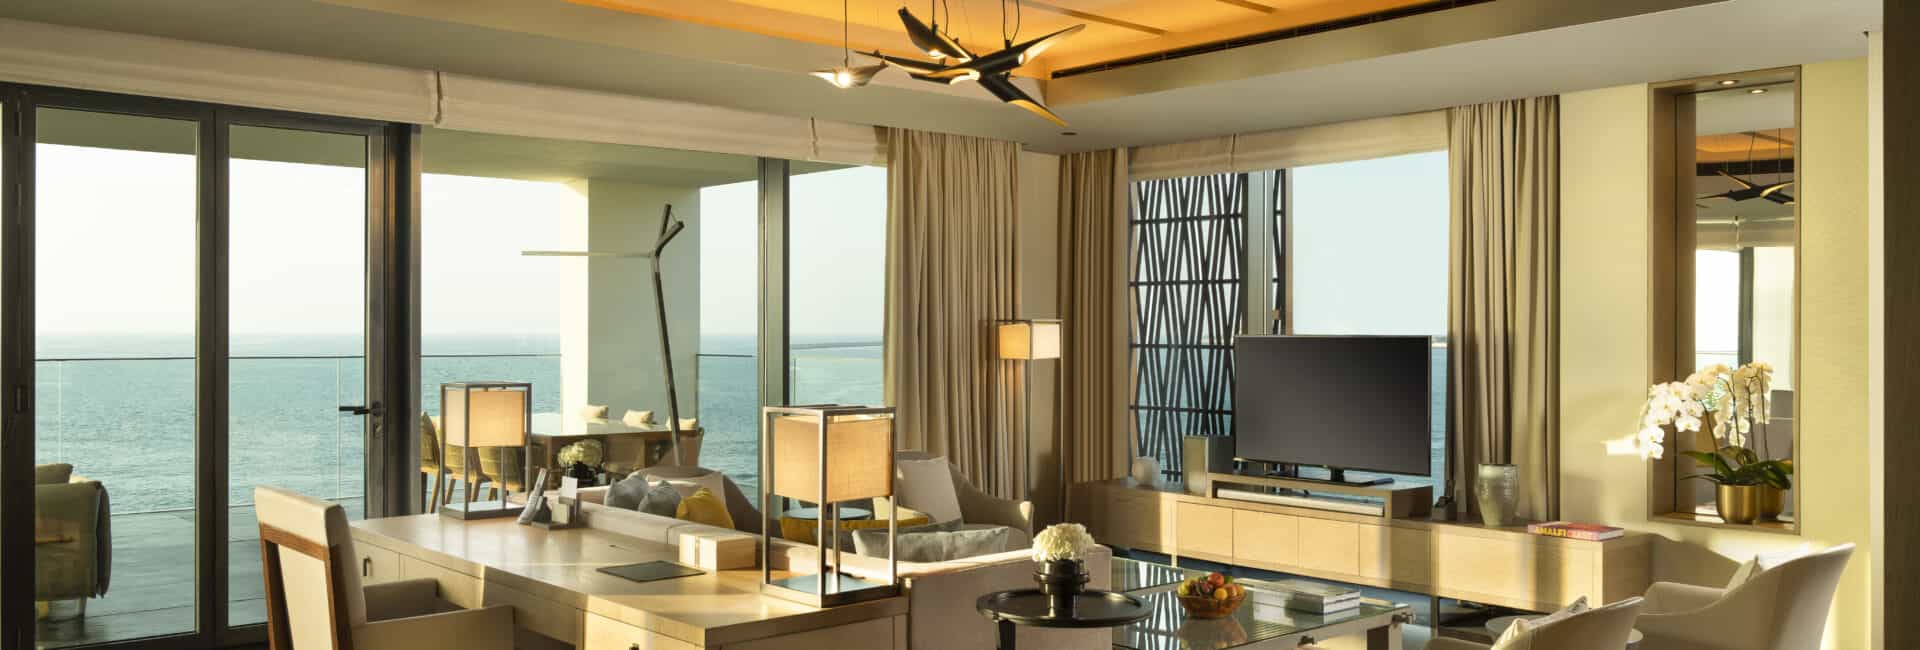 Banyan Tree Dubai - Harmony 2_3 Bedroom Oceanfront Presidential Suite